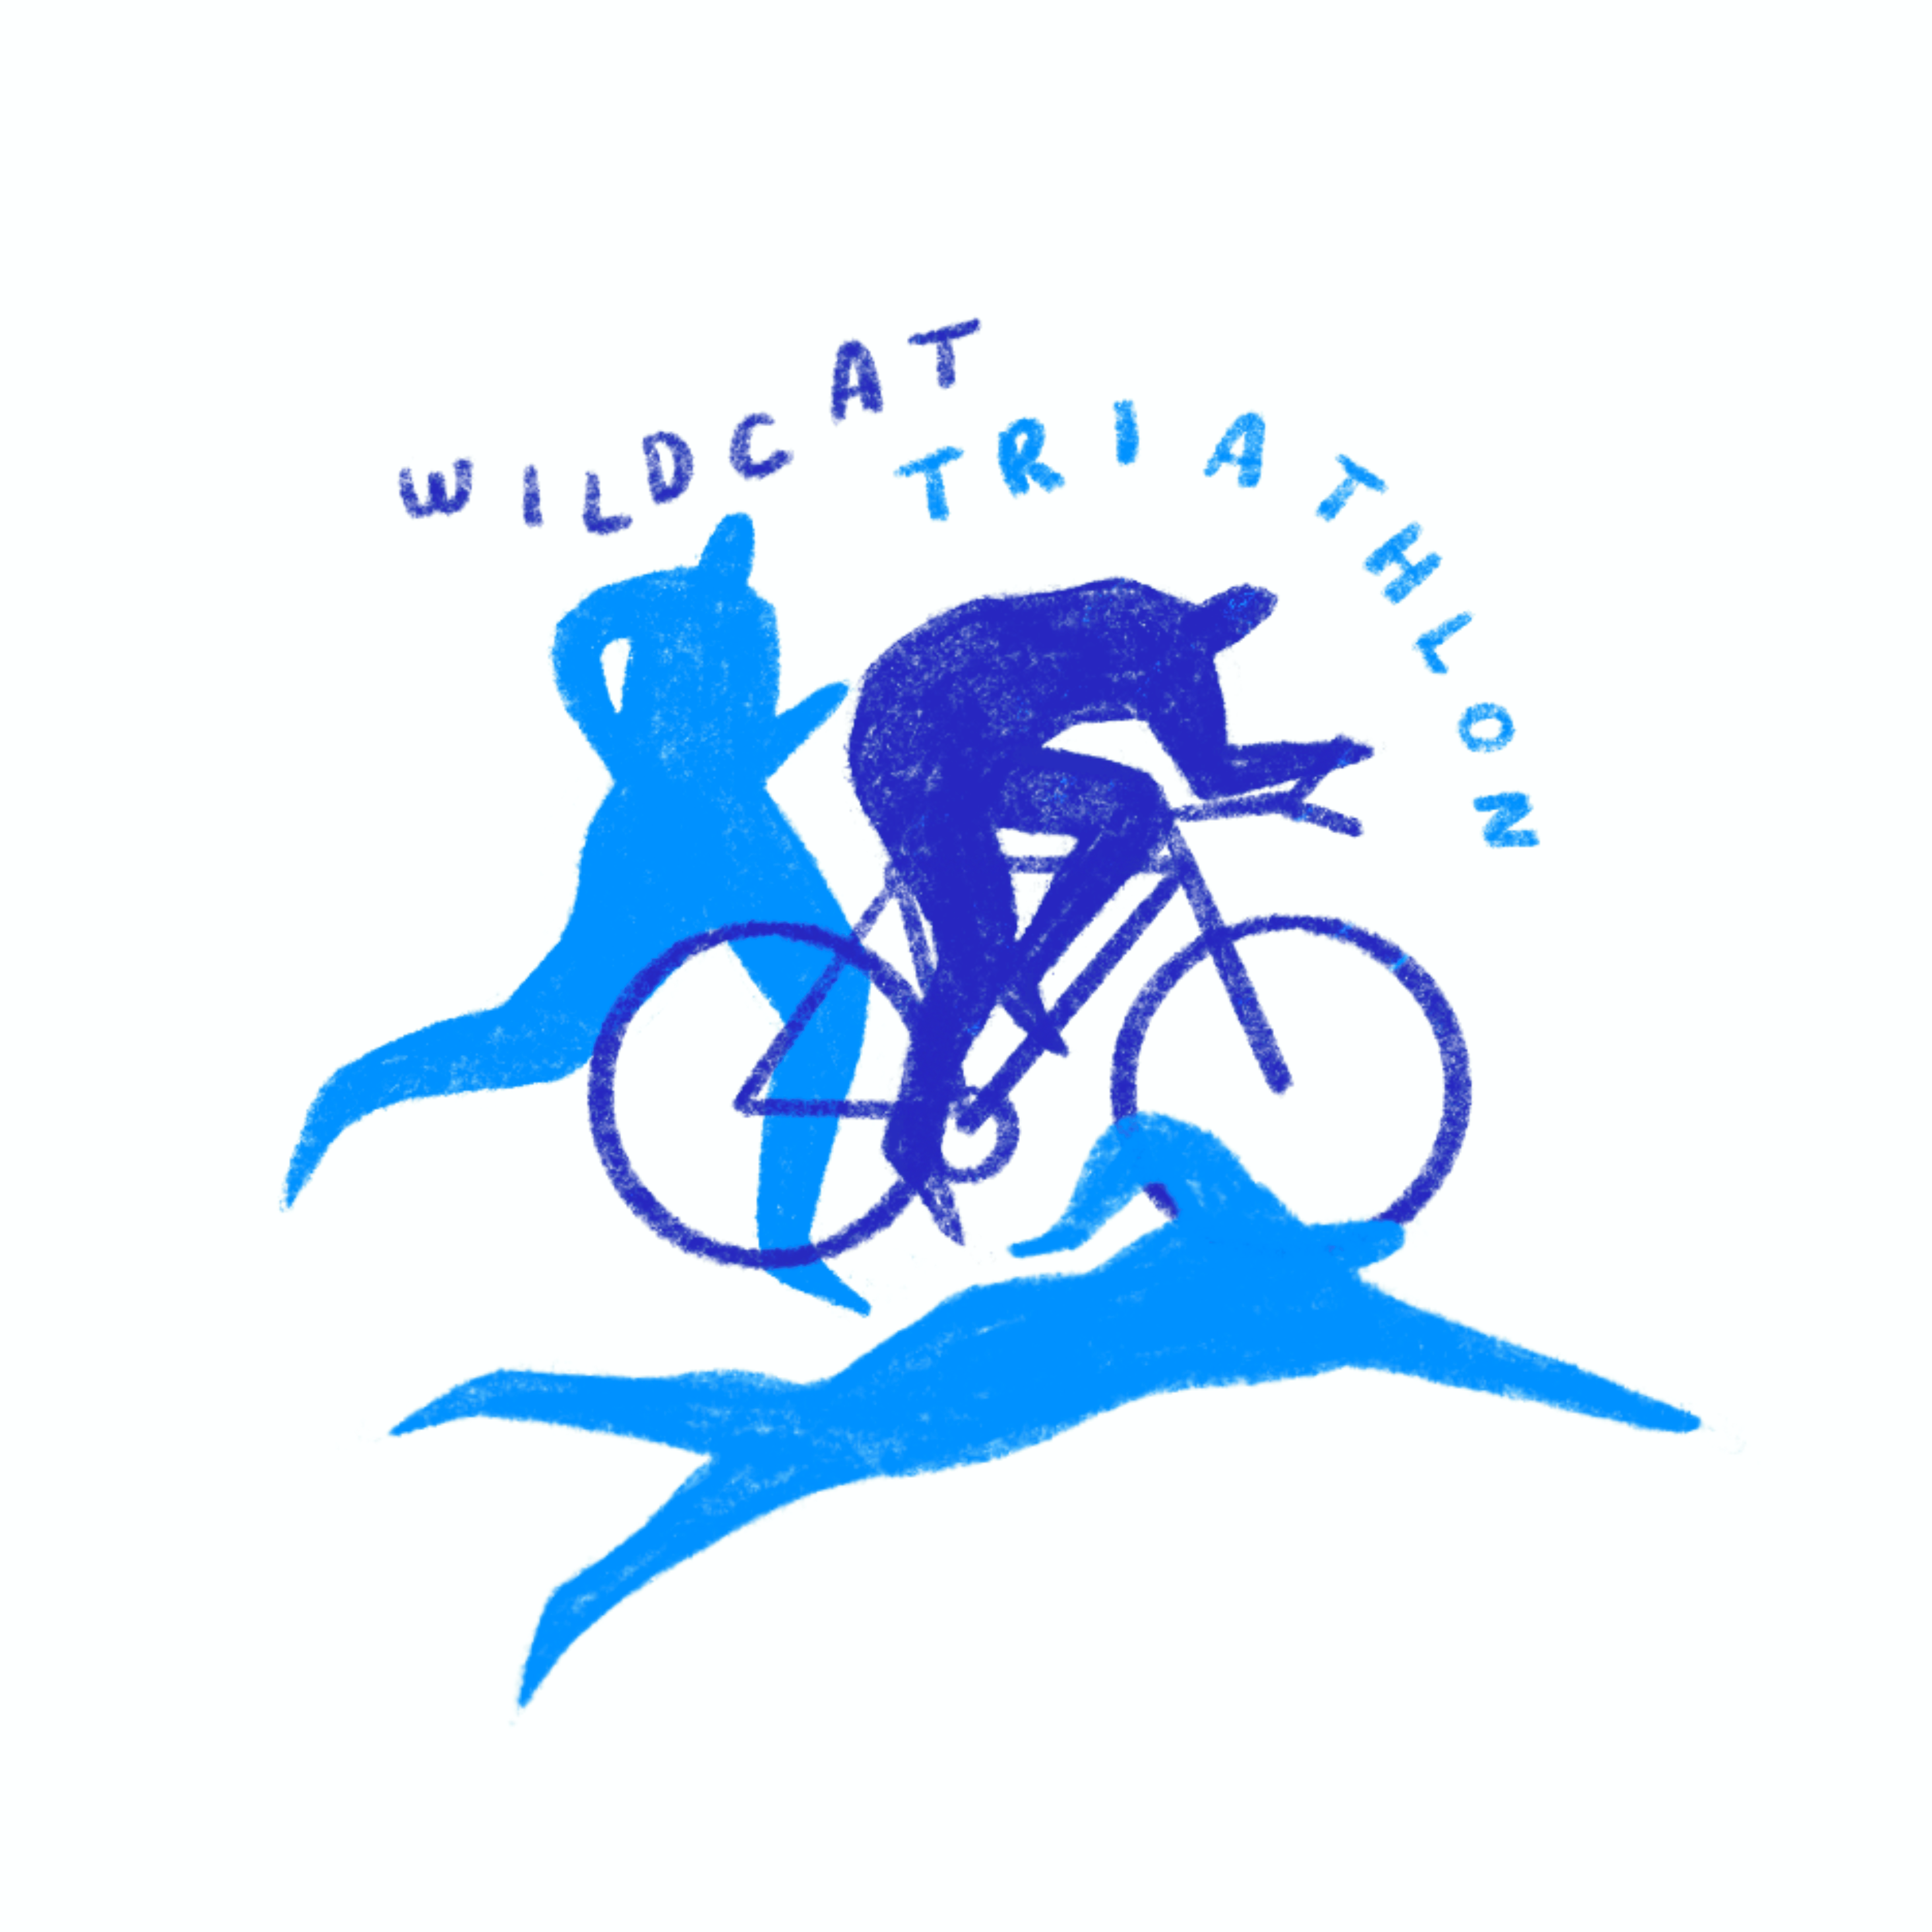 Wildcat Triathlon